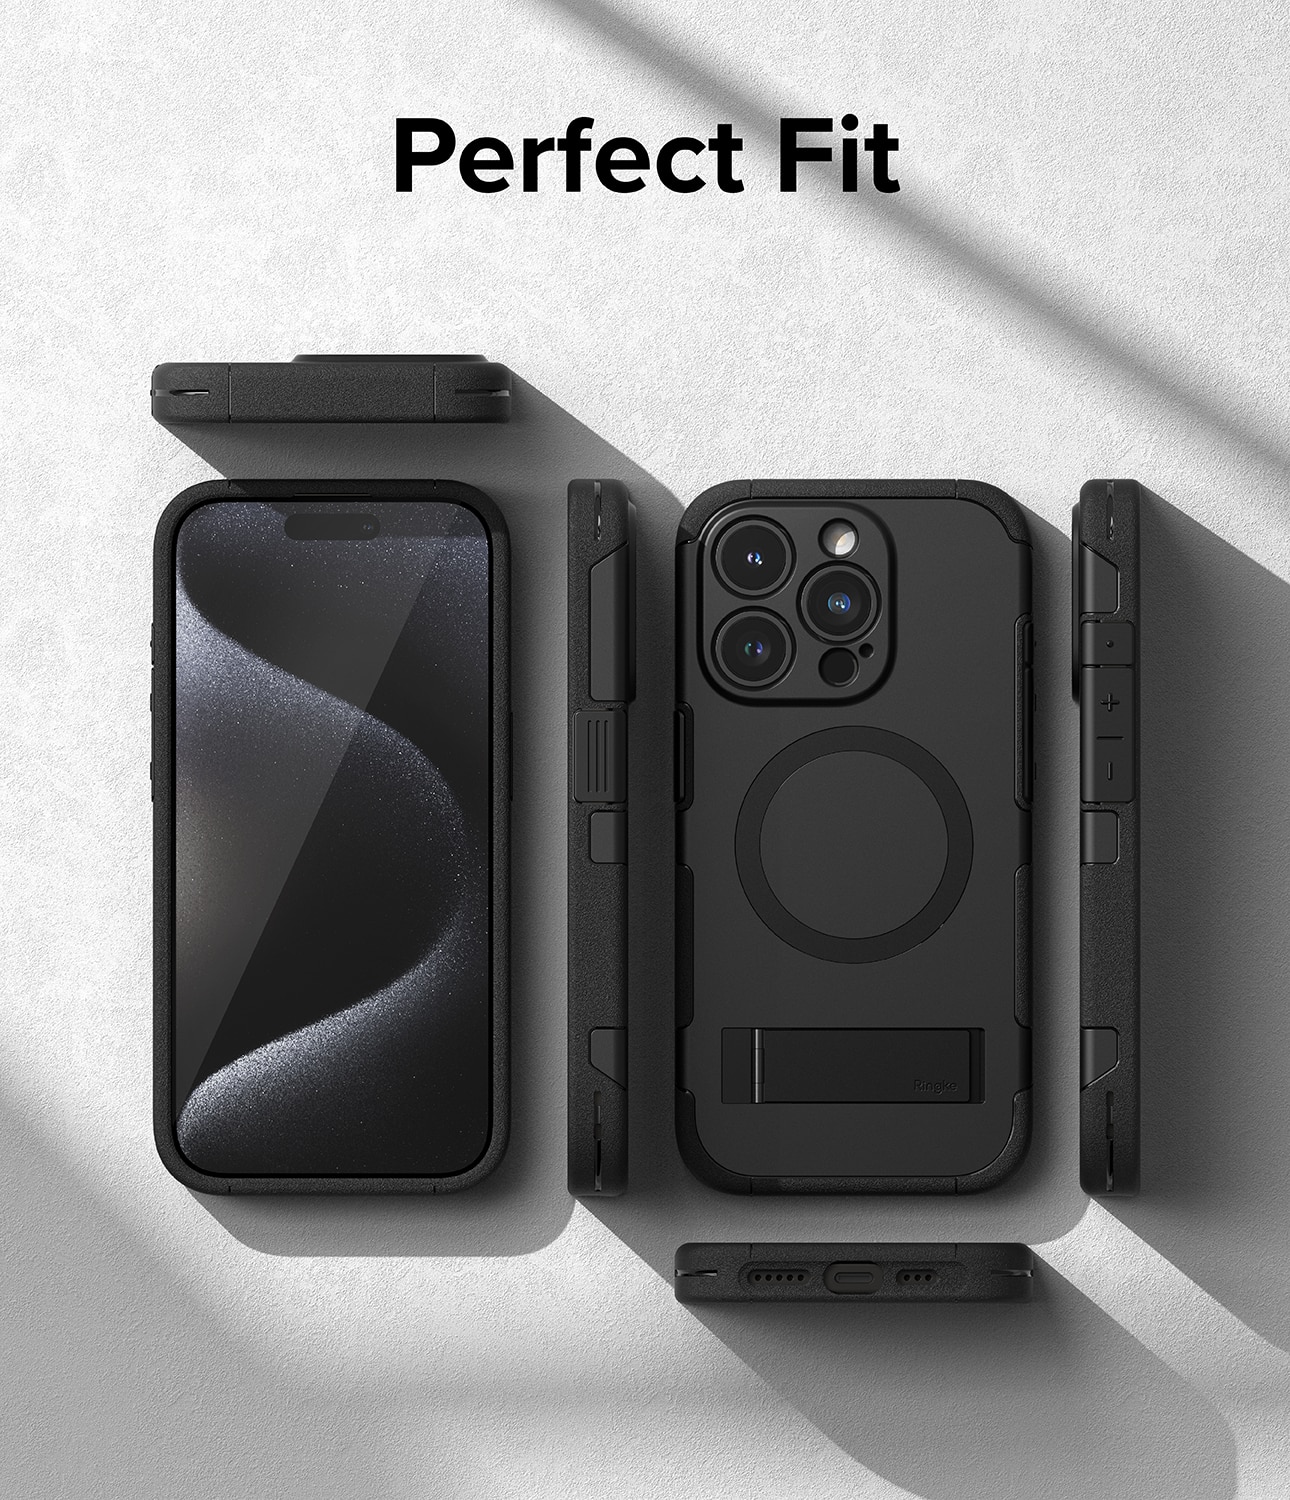 Alles Magnetic Case iPhone 15 Pro Max schwarz